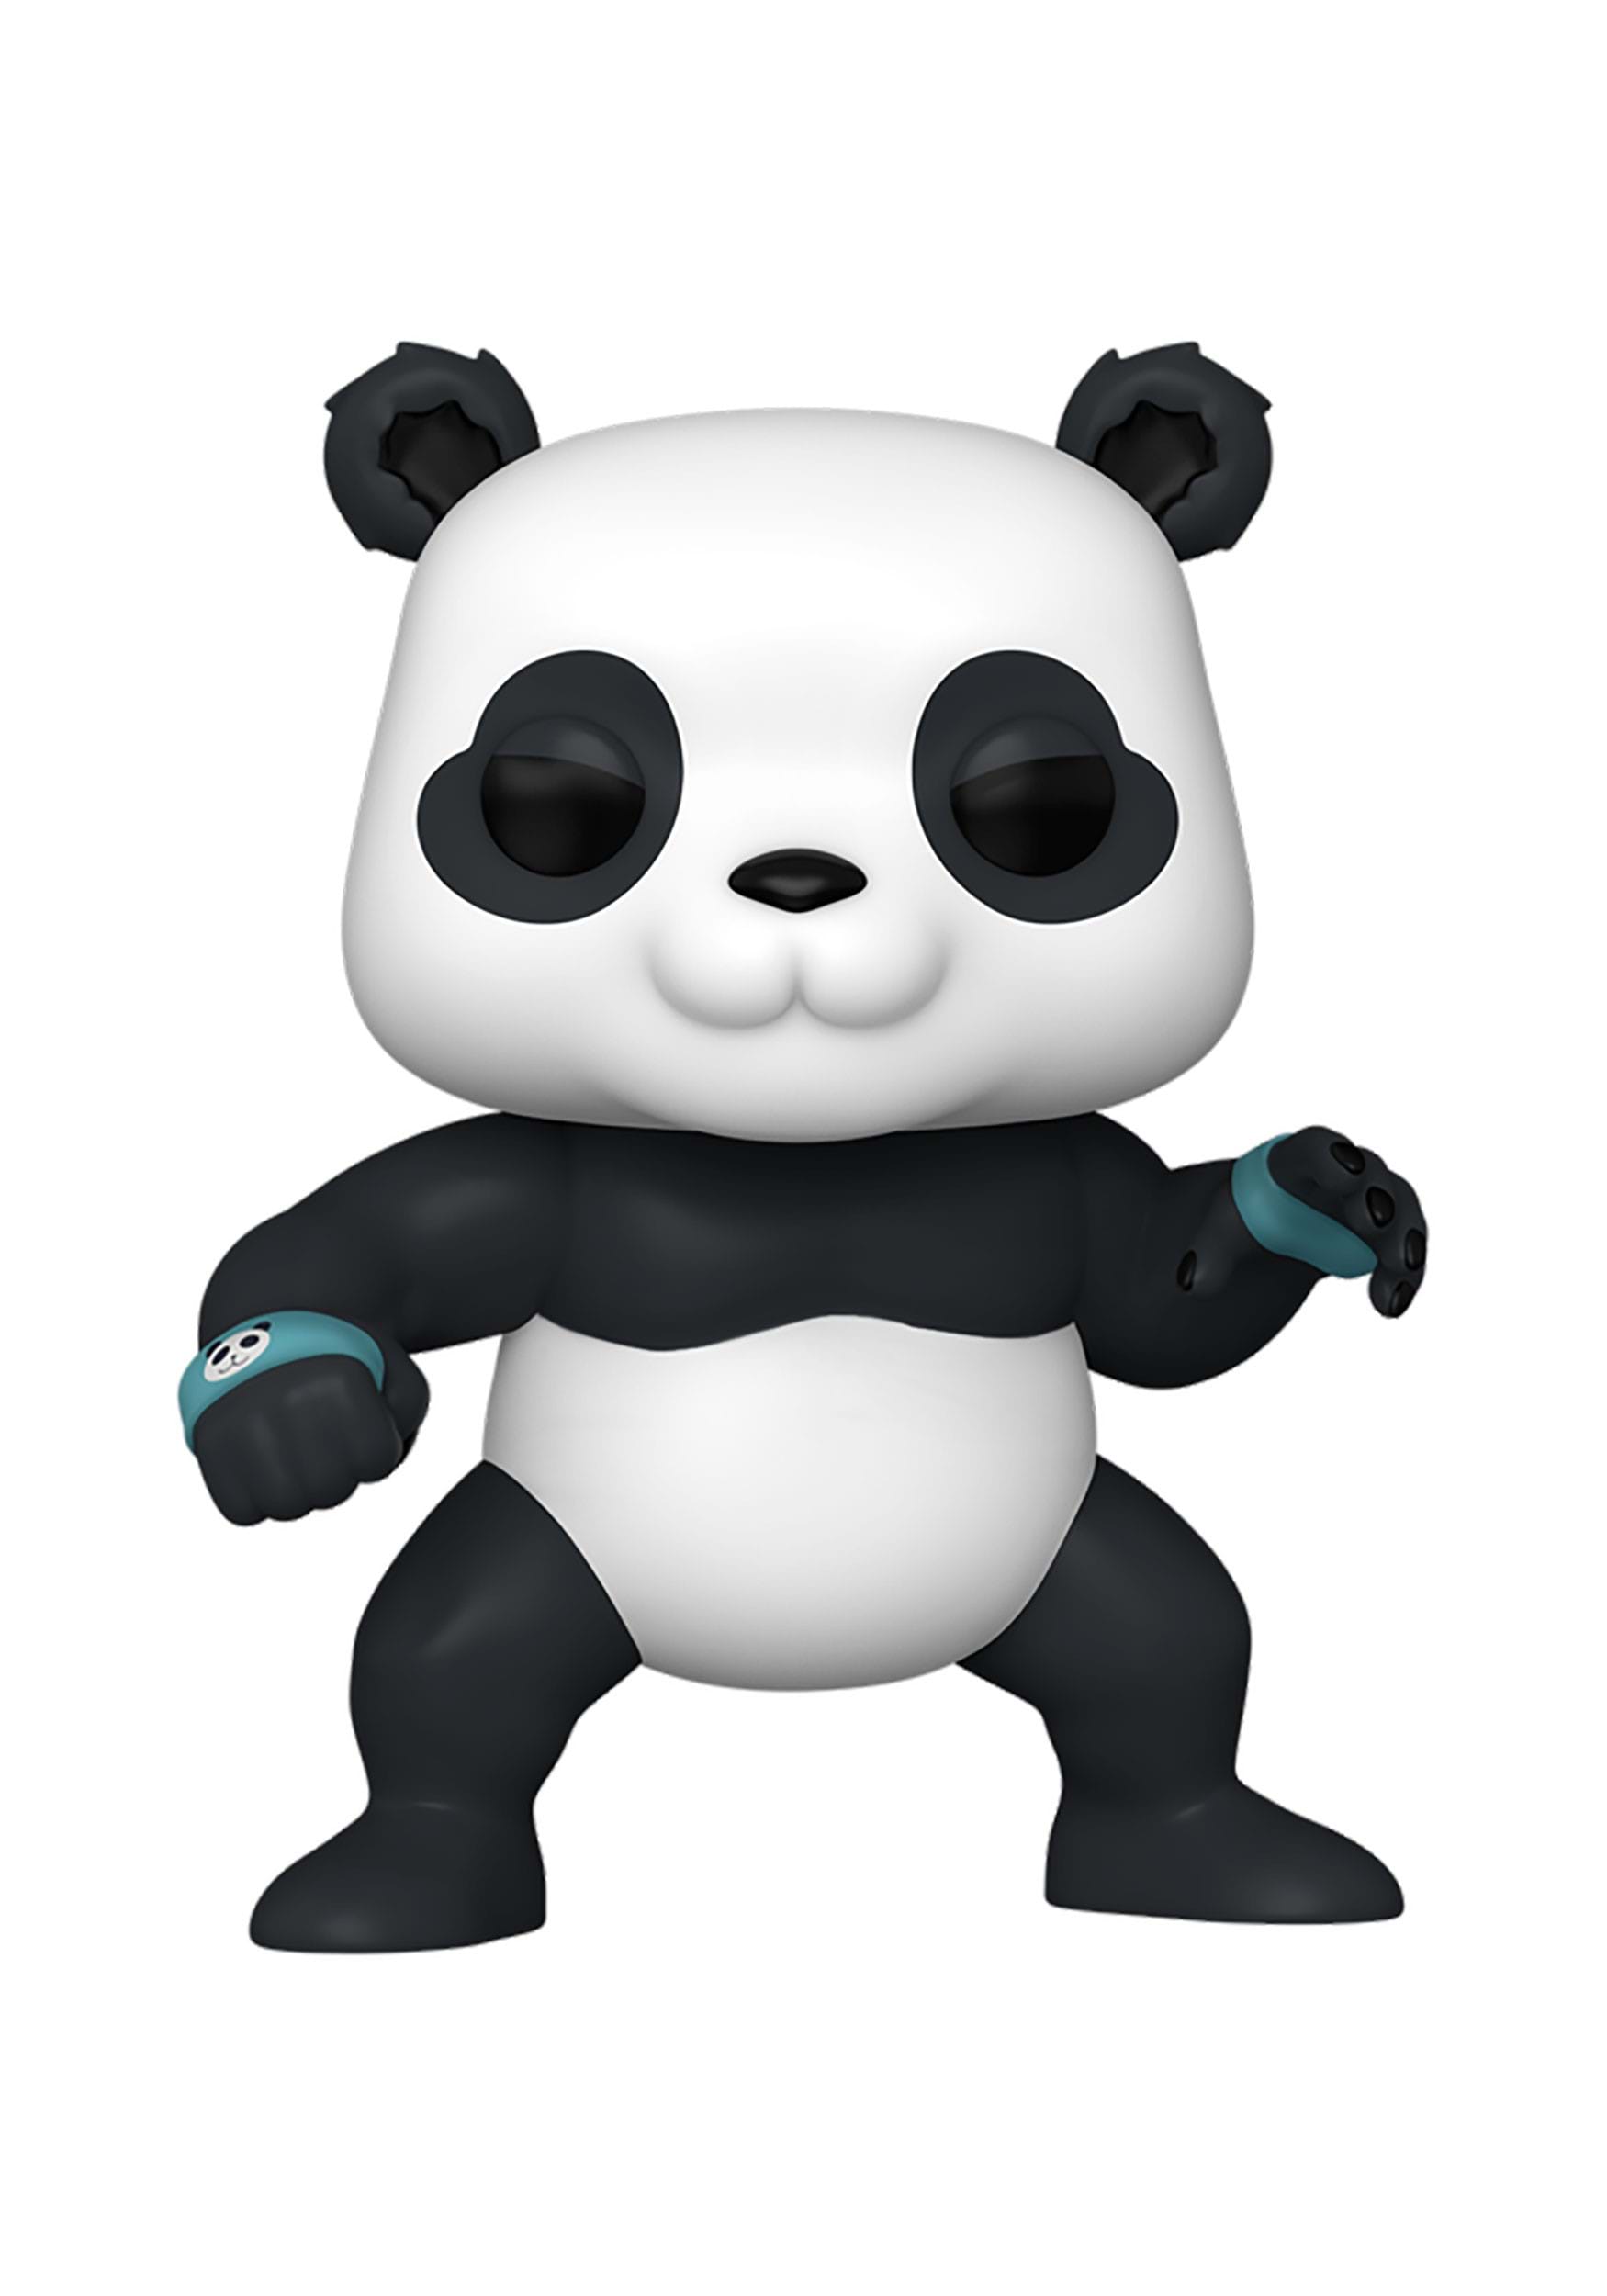 Funko POP! Animation: Jujutsu Kaisen Season 2 - Panda